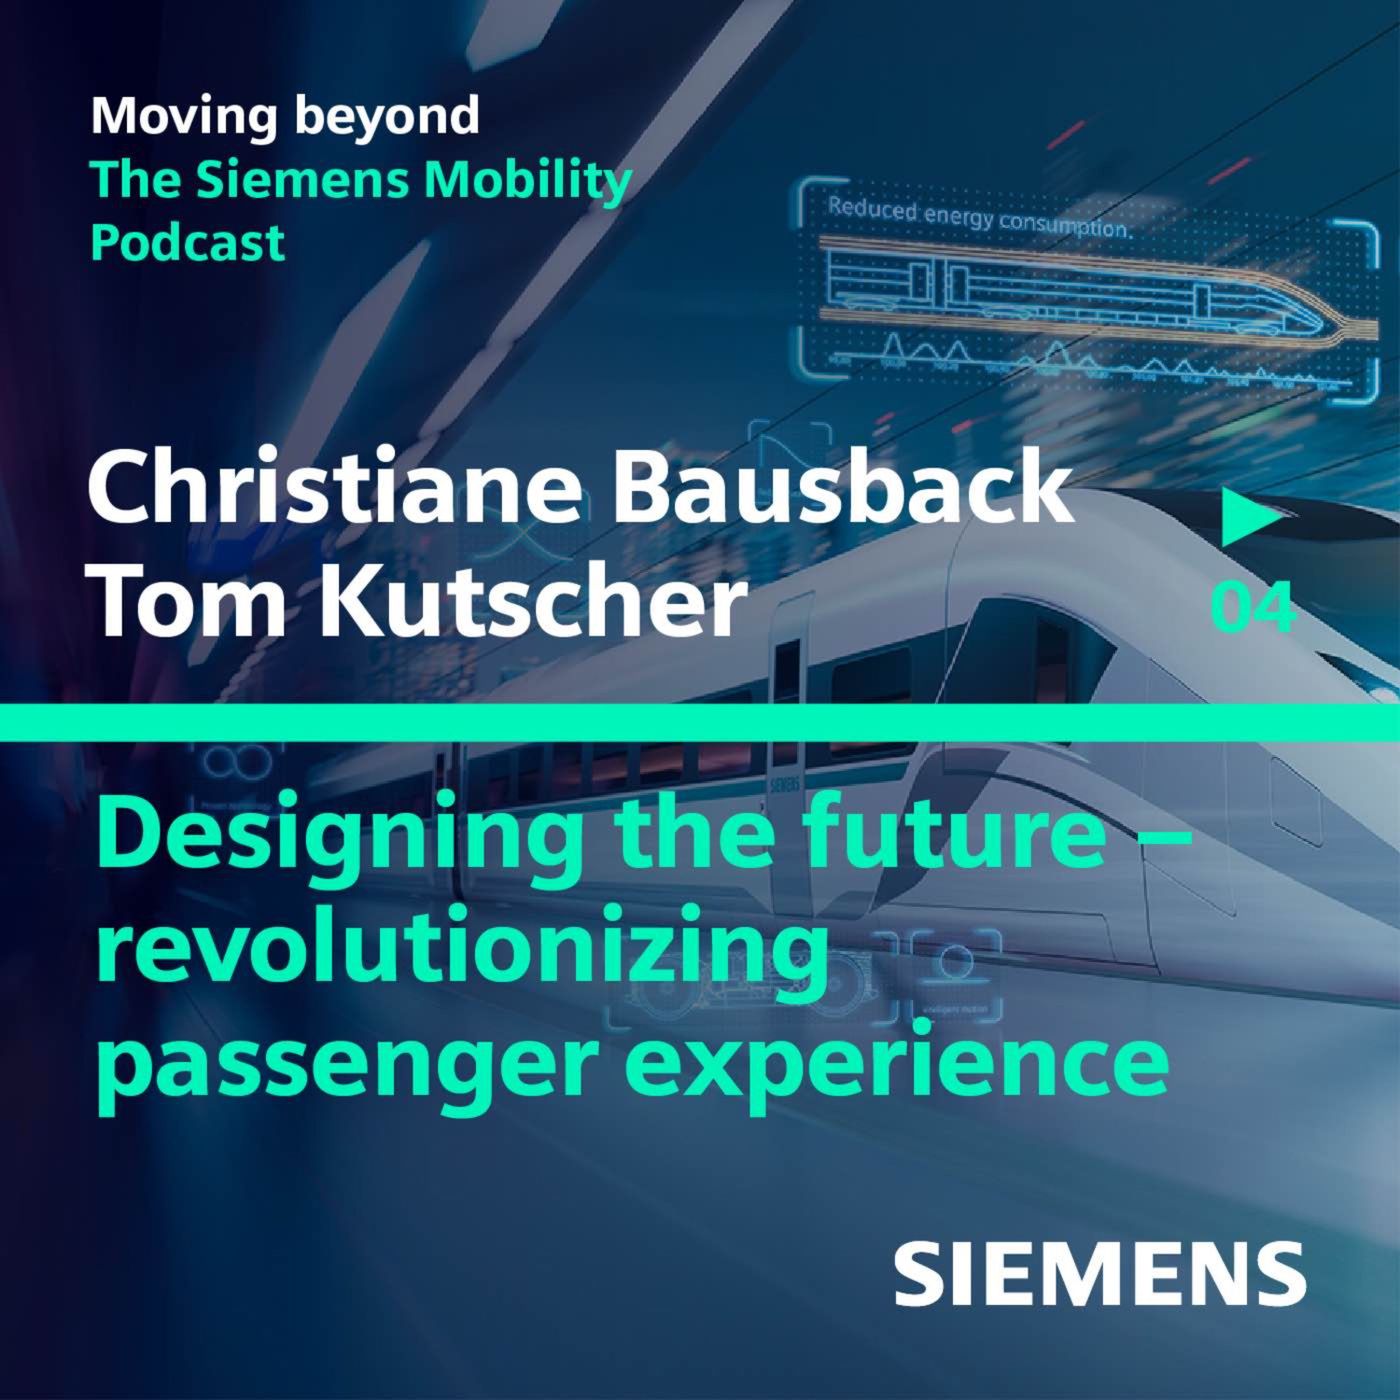 Designing the future - revolutionizing passenger experience